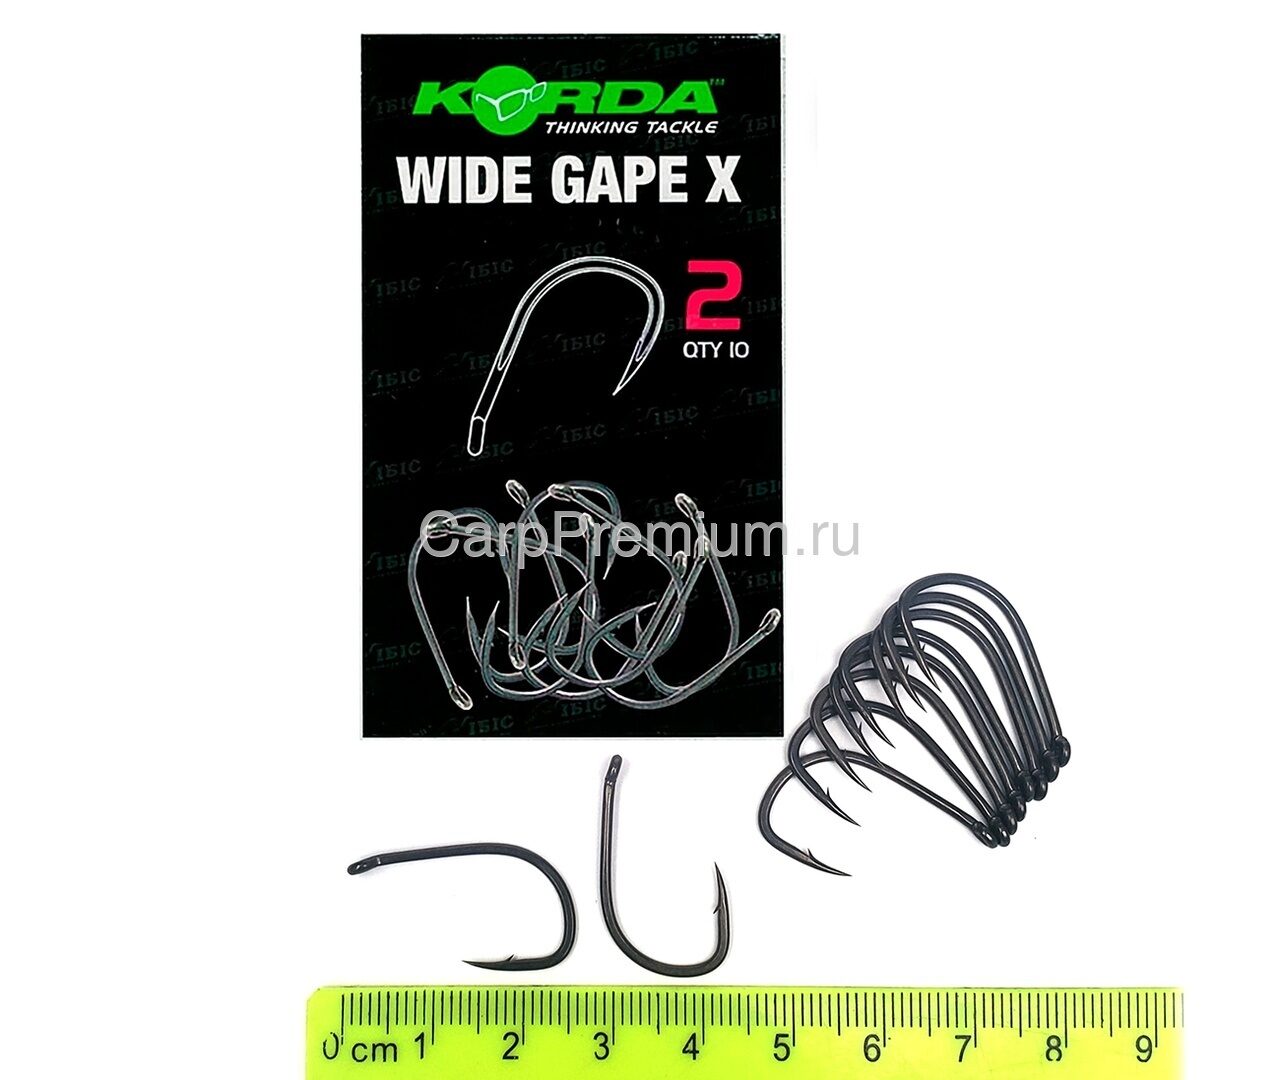 Карповые крючки Korda (Корда) - Wide Gape X, Размер 2, 10 шт